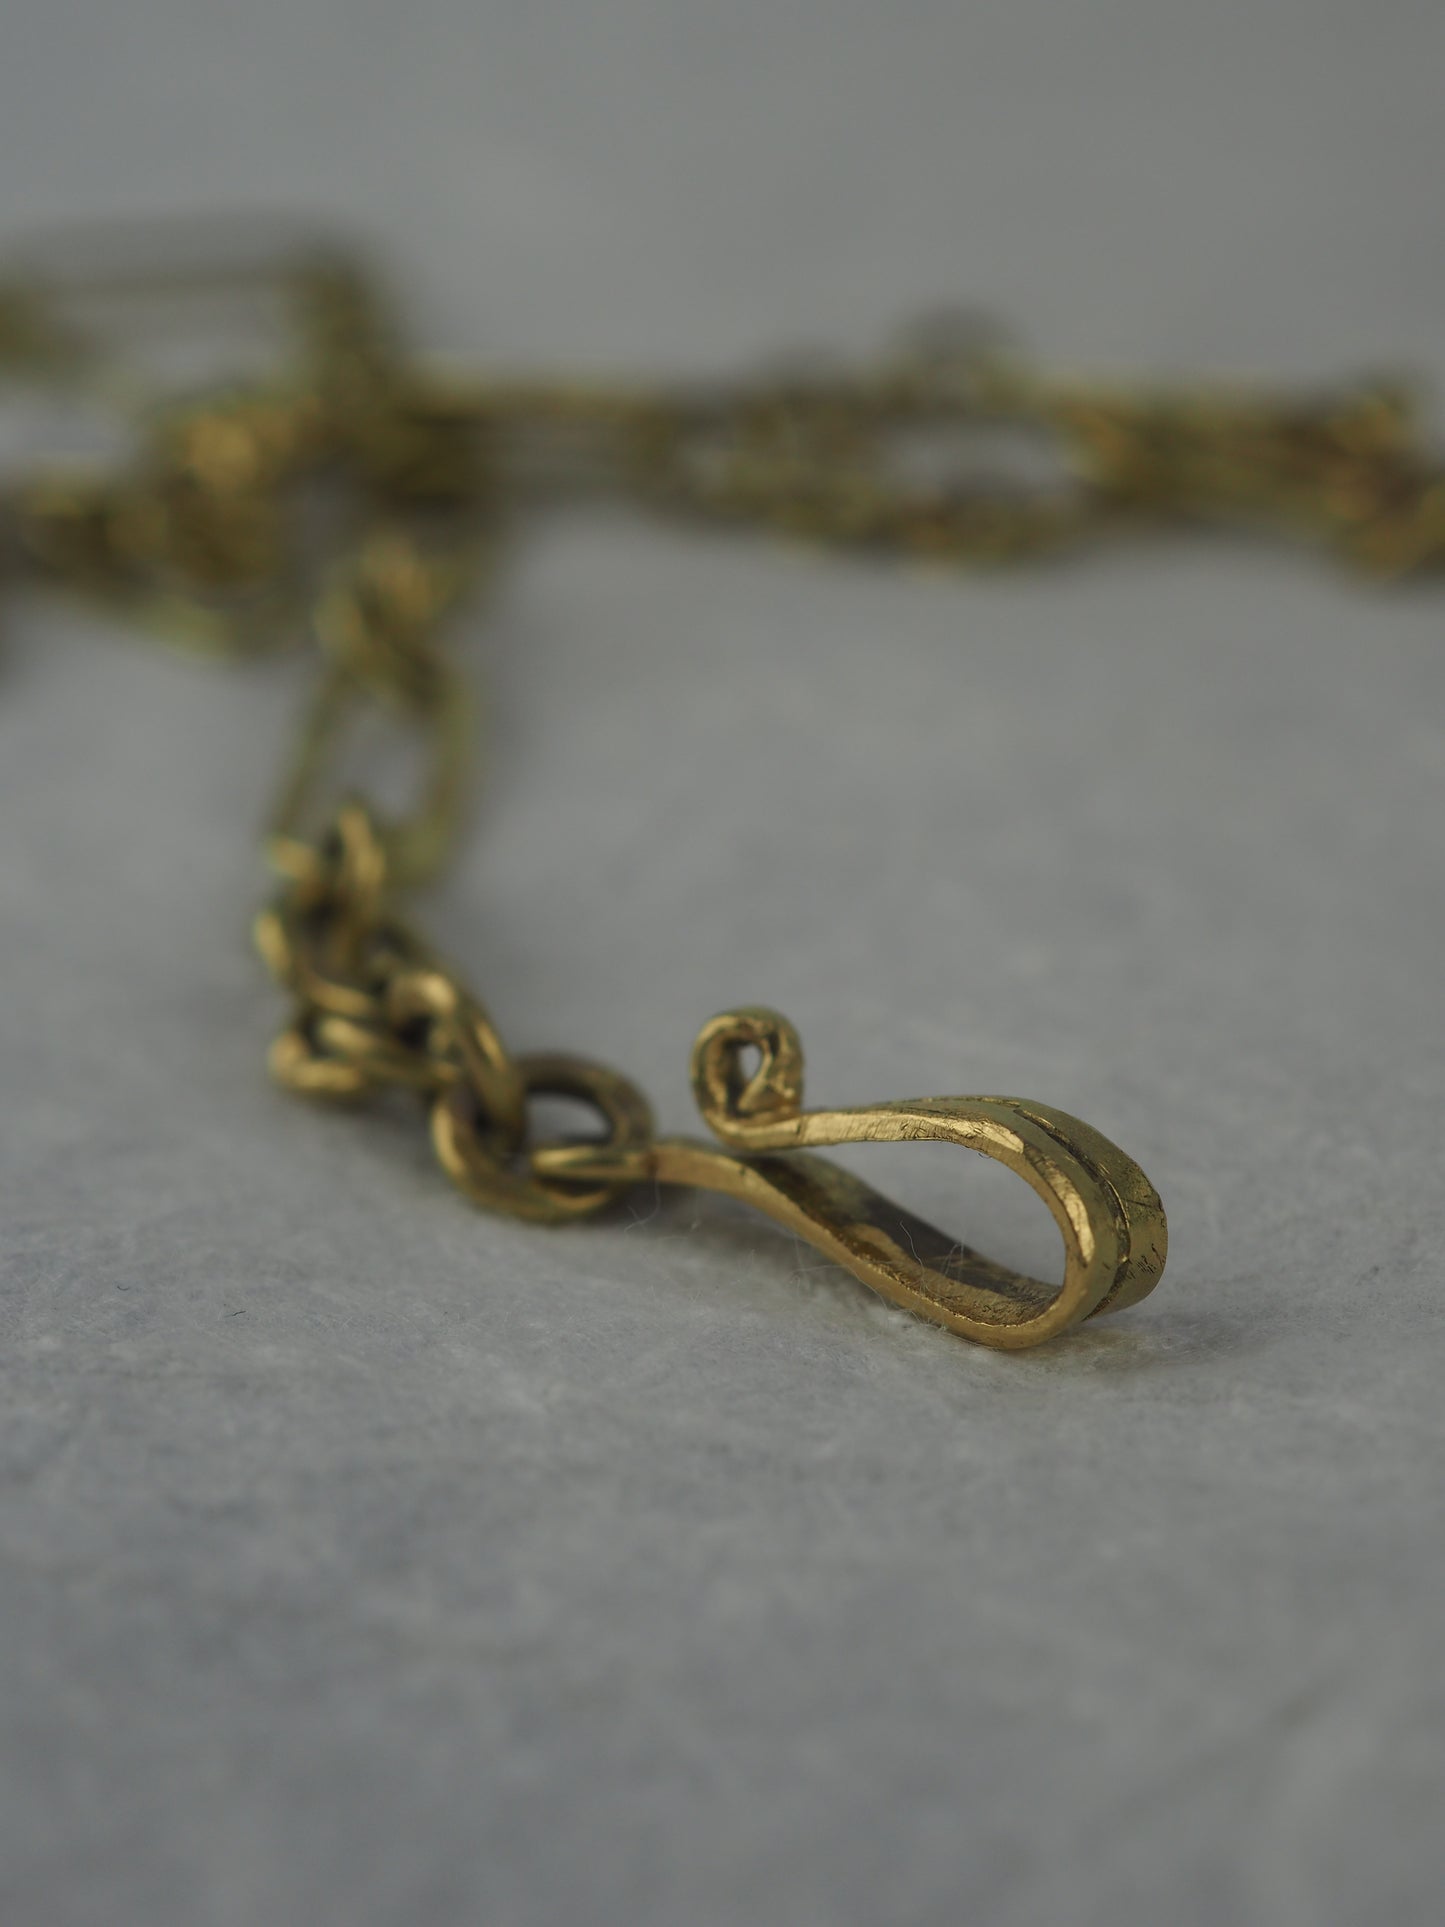 Royle, Guy – 18ct Gold Necklace